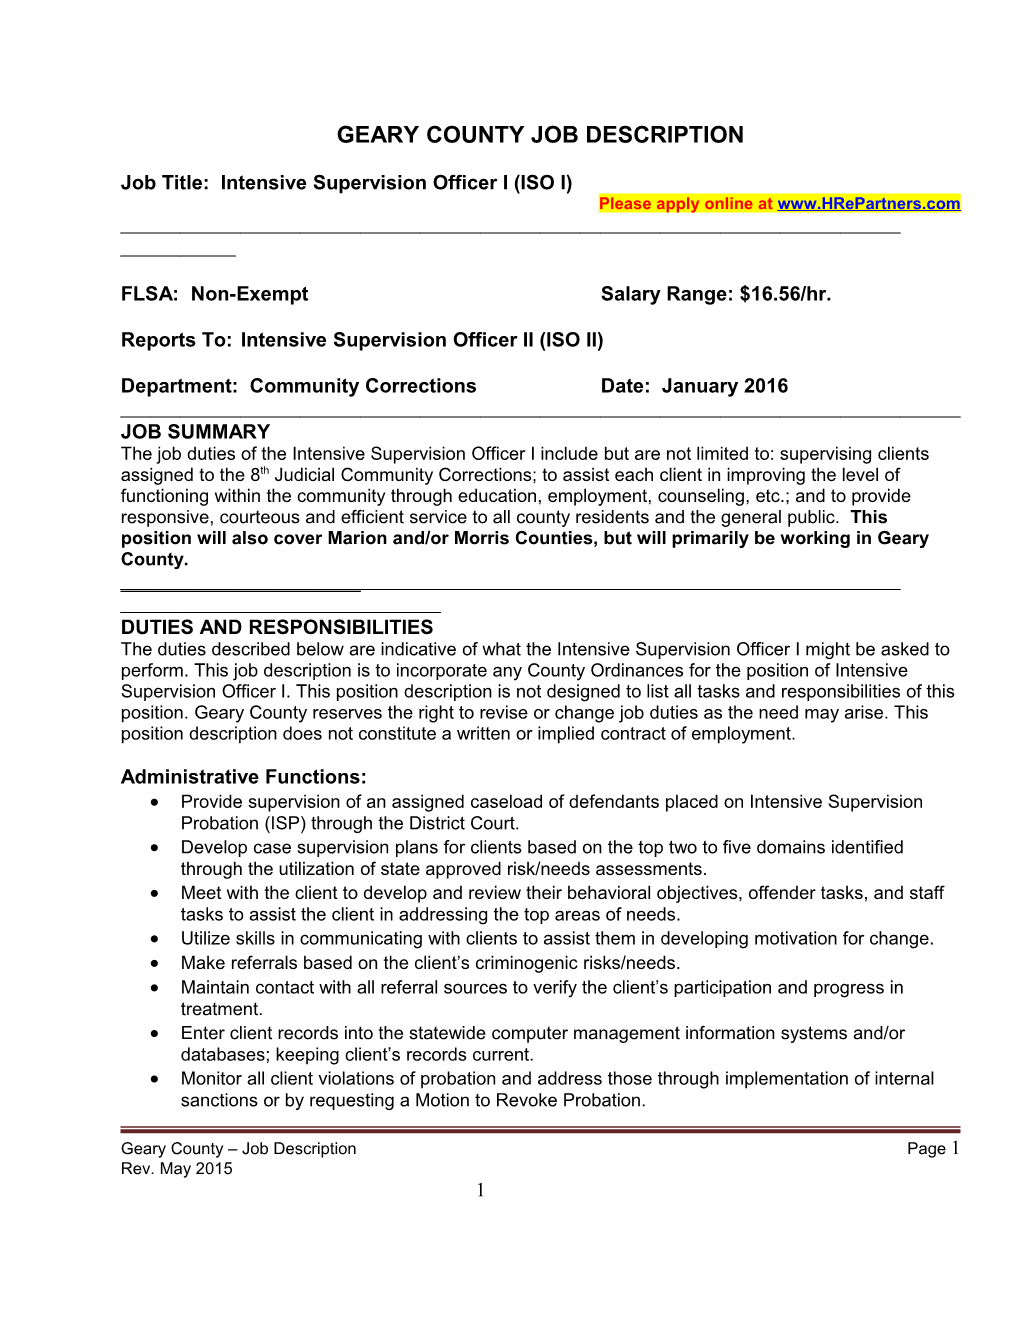 Job Title: Intensive Supervision Officer I (ISO I)